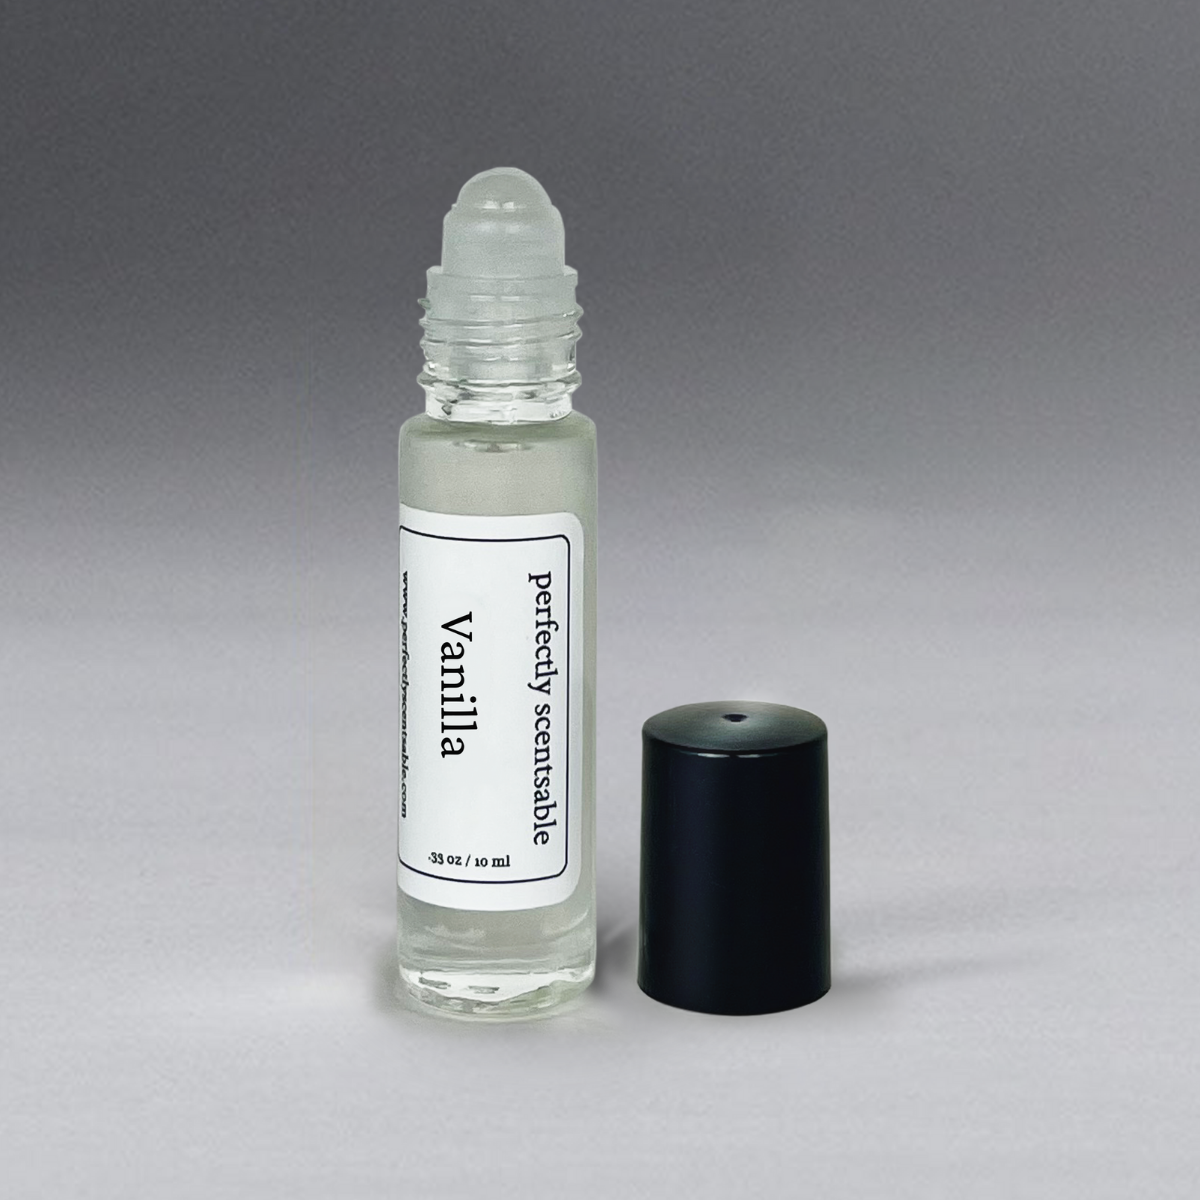 Vanilla Sands Perfume Oil by Tarife Attar, Premium, Warm Vanilla Scent,  Alcohol-free, Vegan, Perfect Gift 